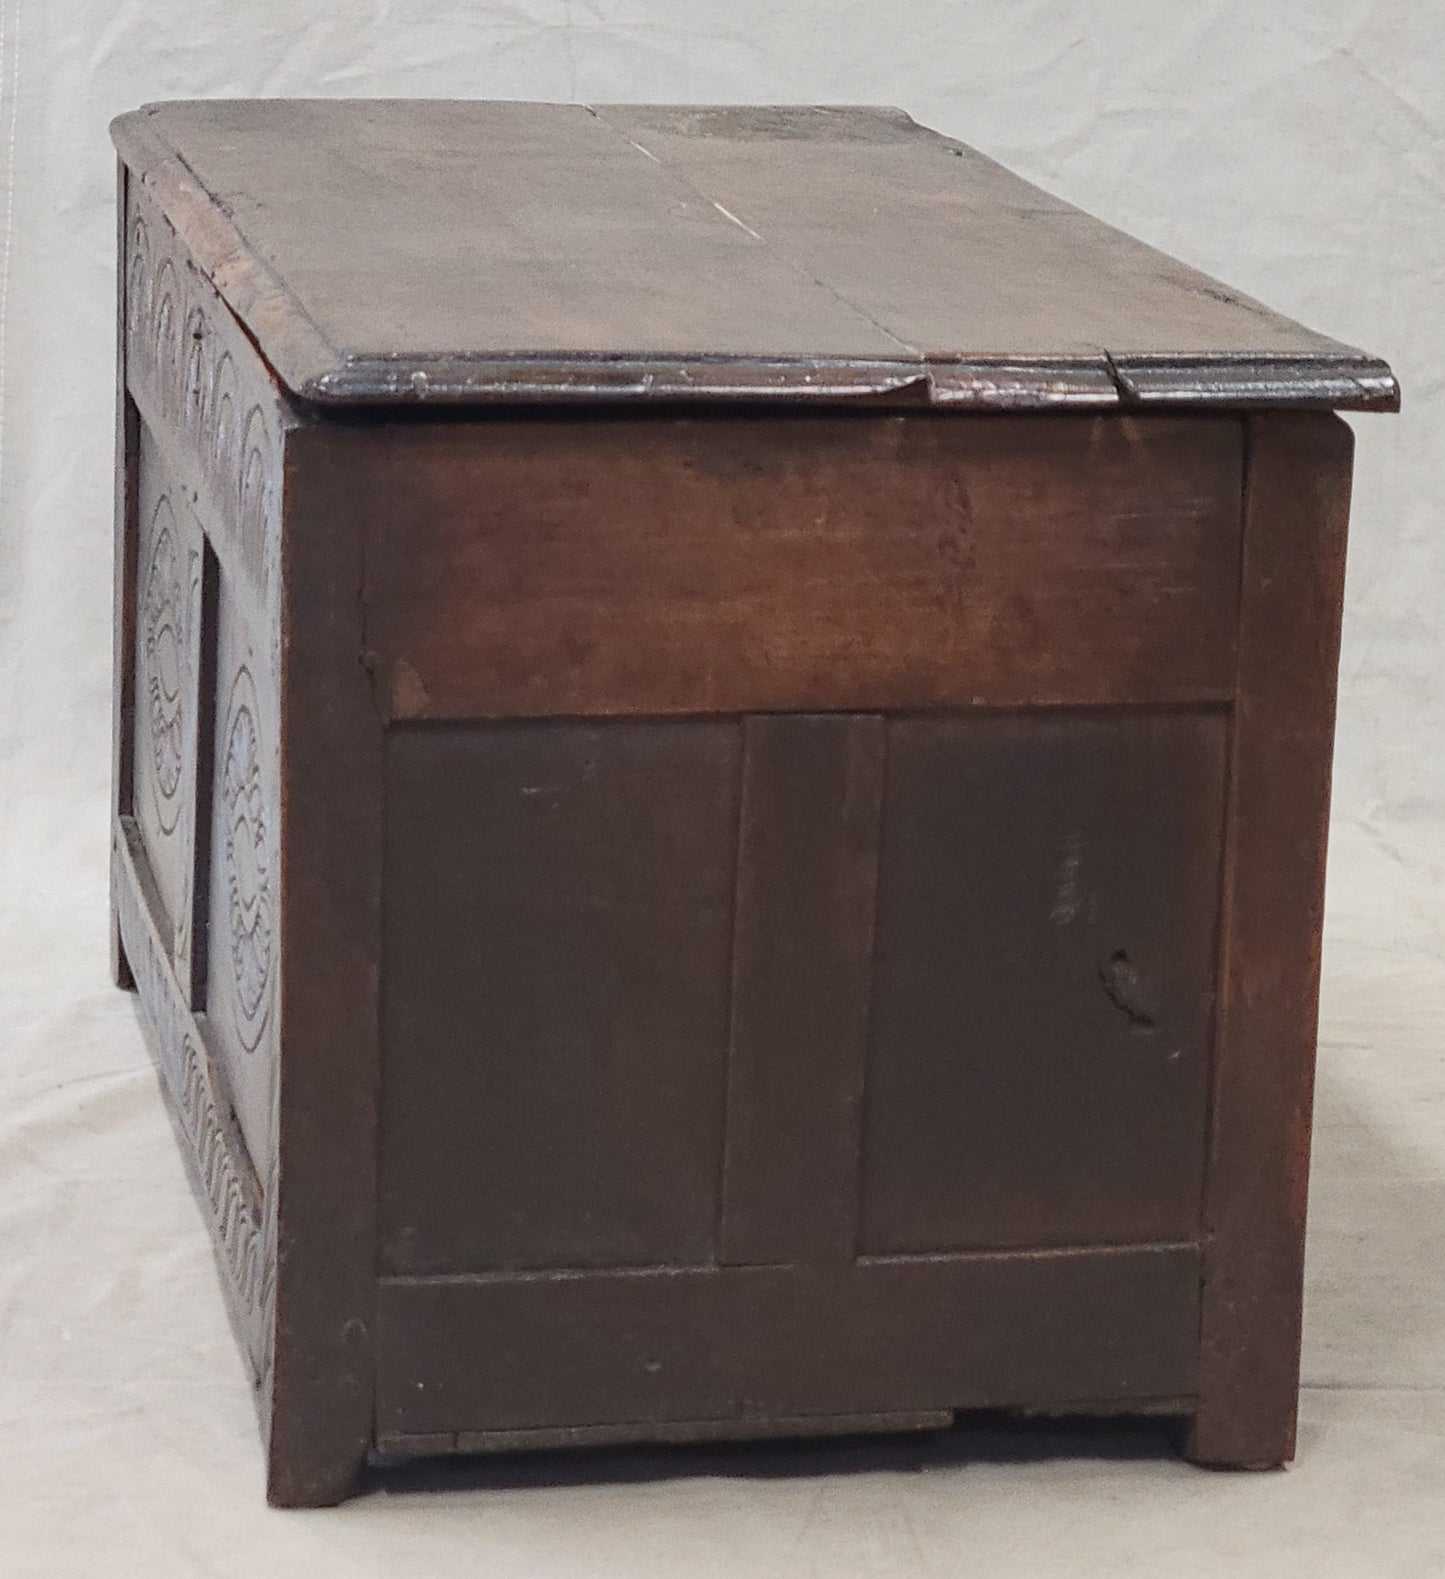 Antique 1800s English Carved Oak Coffer Storage Trunk Box